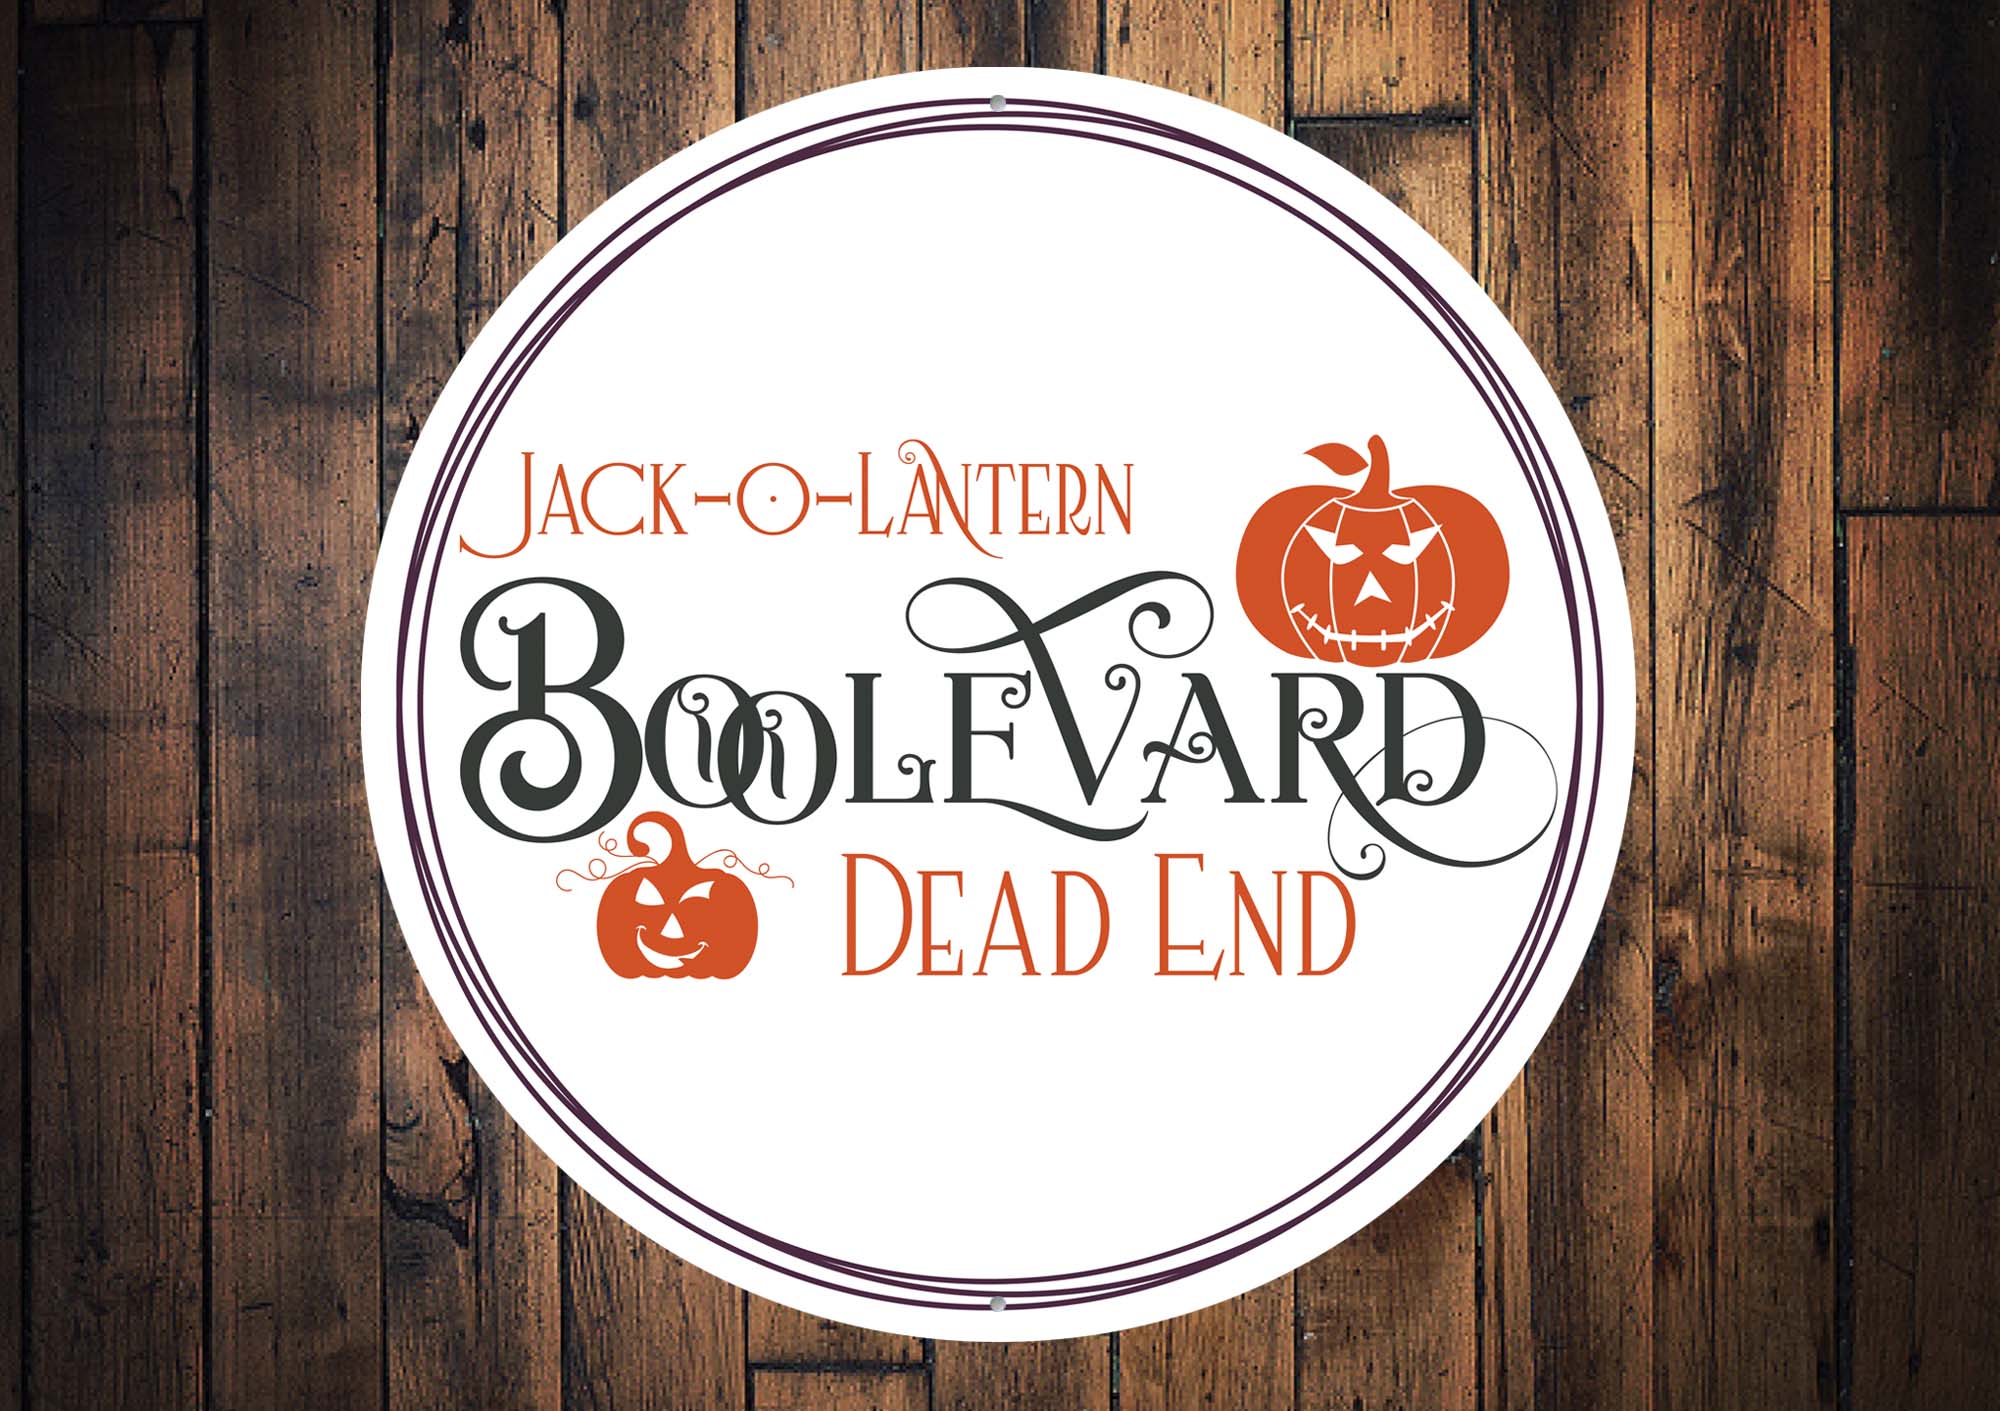 Jack O Lantern Boolevard Dead End Sign